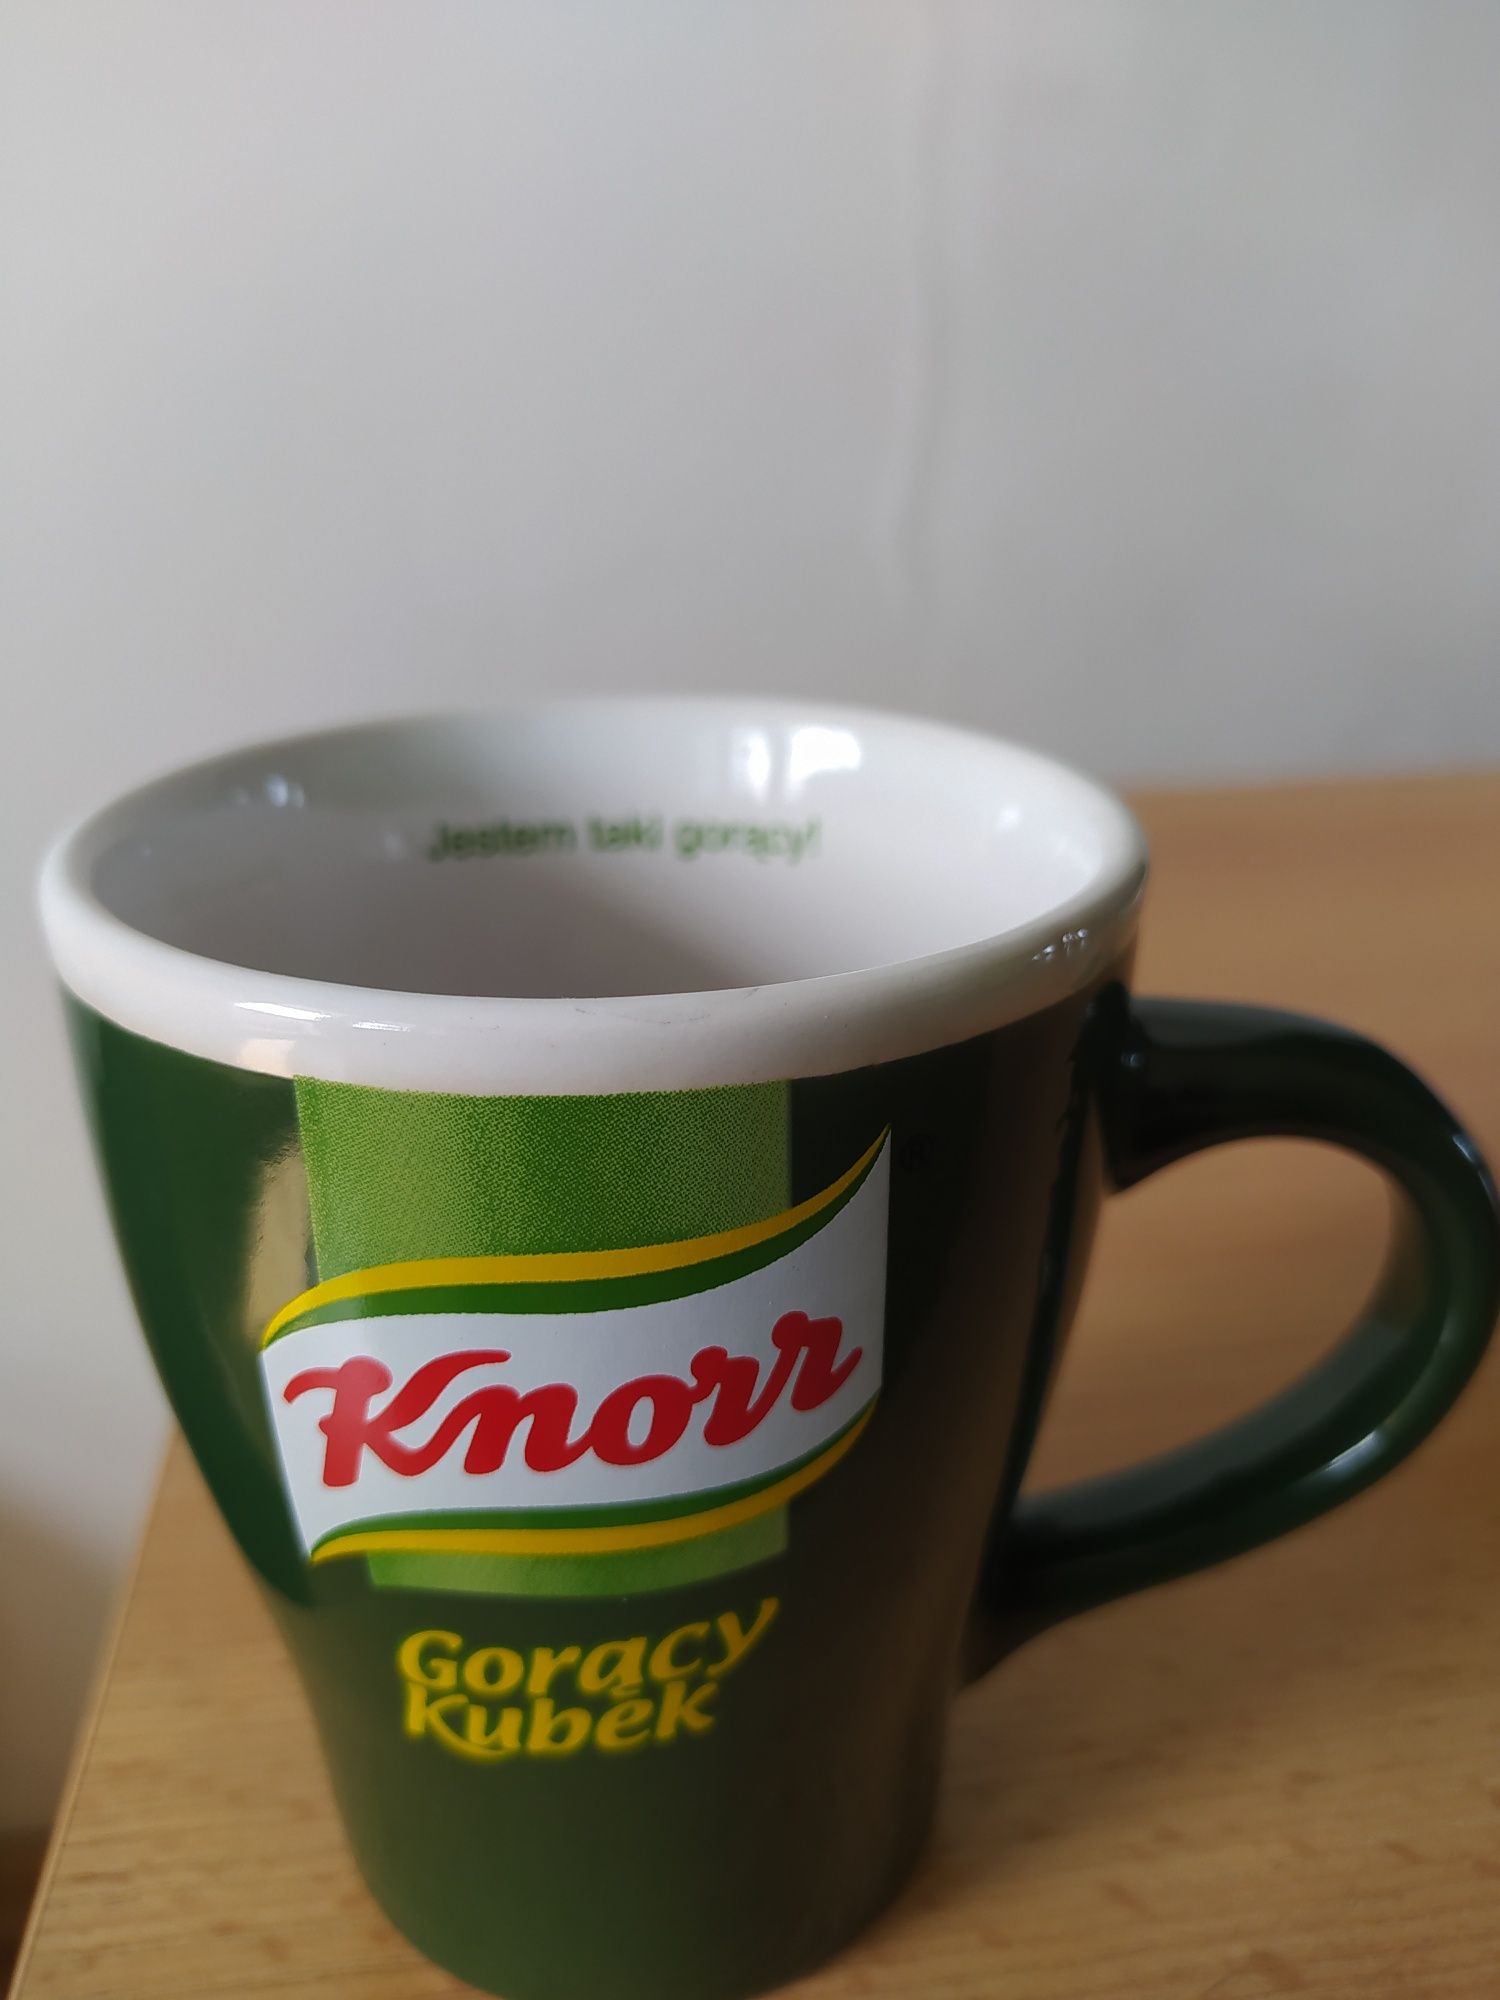 Kubek Knorr z napisem